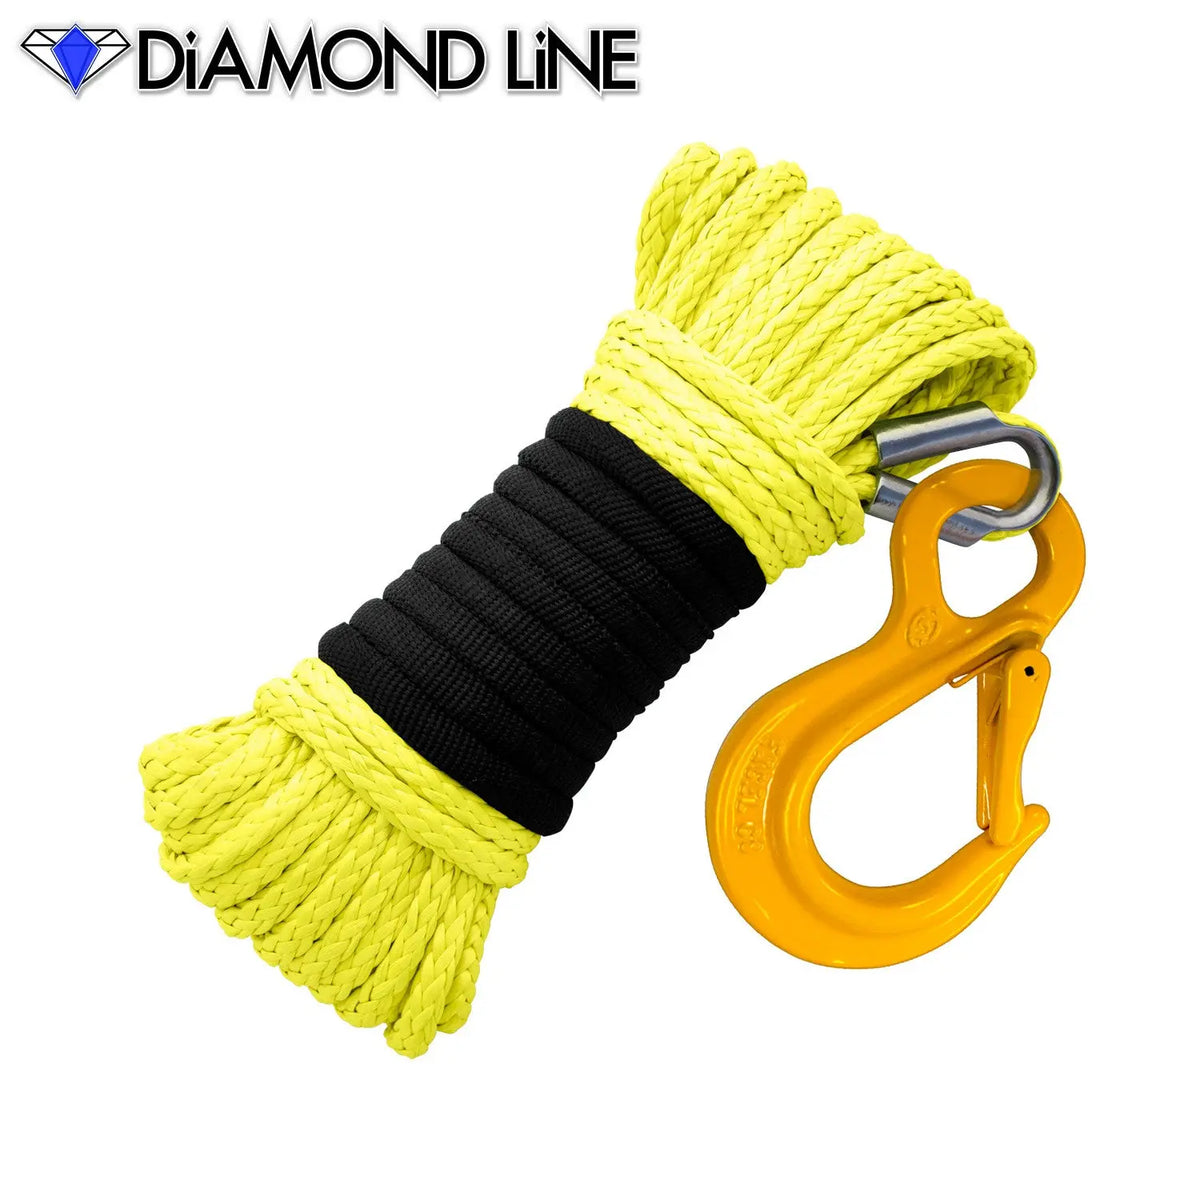 3/16" x 50' Diamond Line Winch Rope Mainline - Yellow with Hook. 